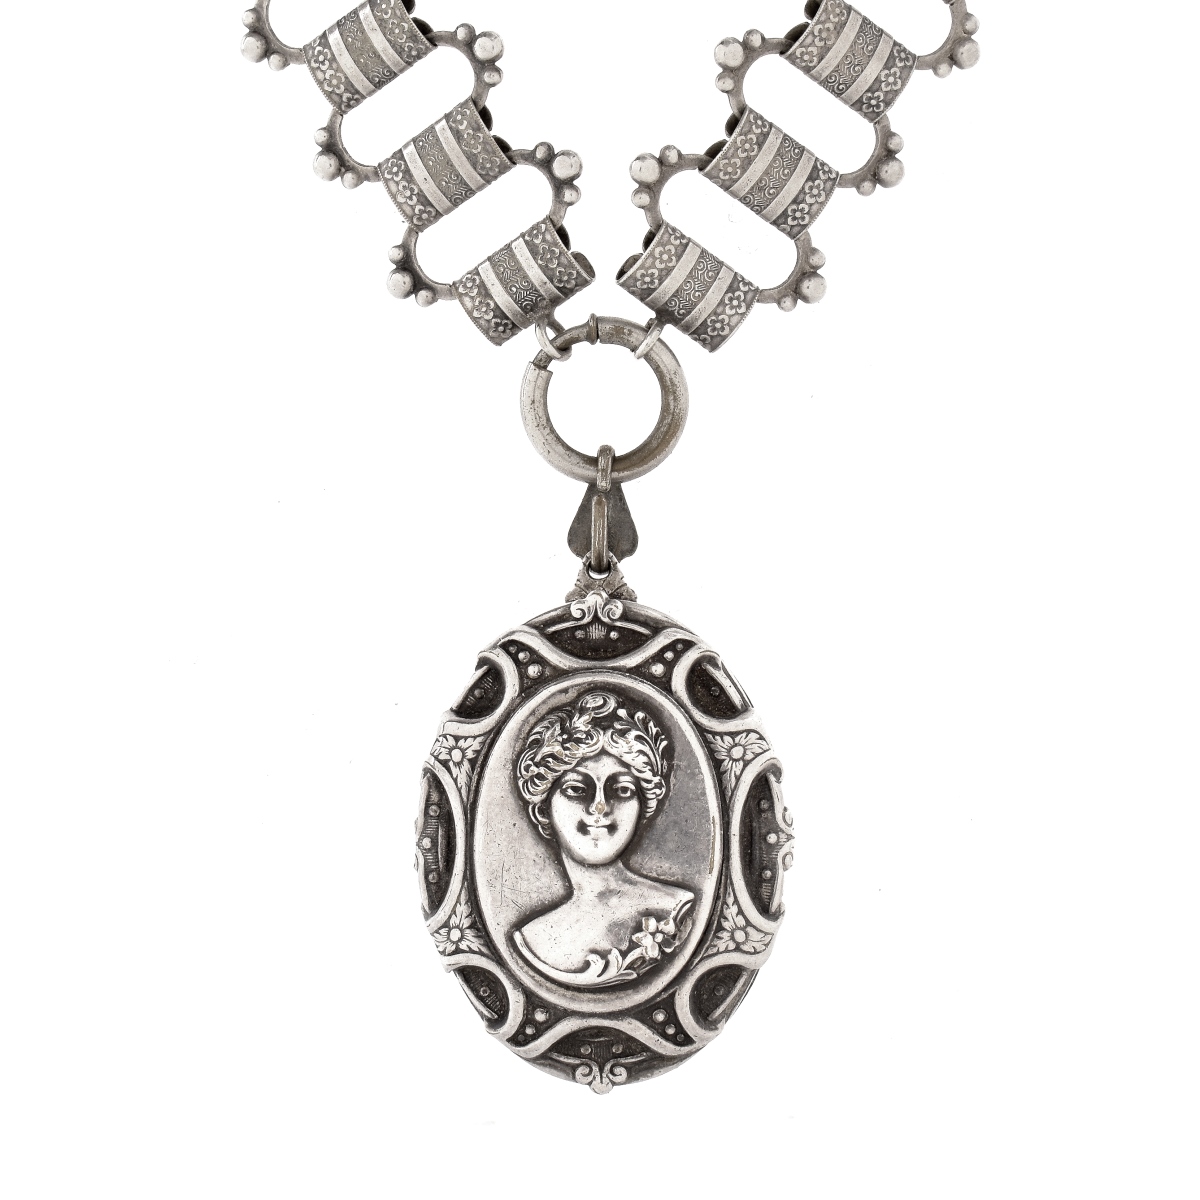 Antique Silver Necklace and Pietra Dura Pendant